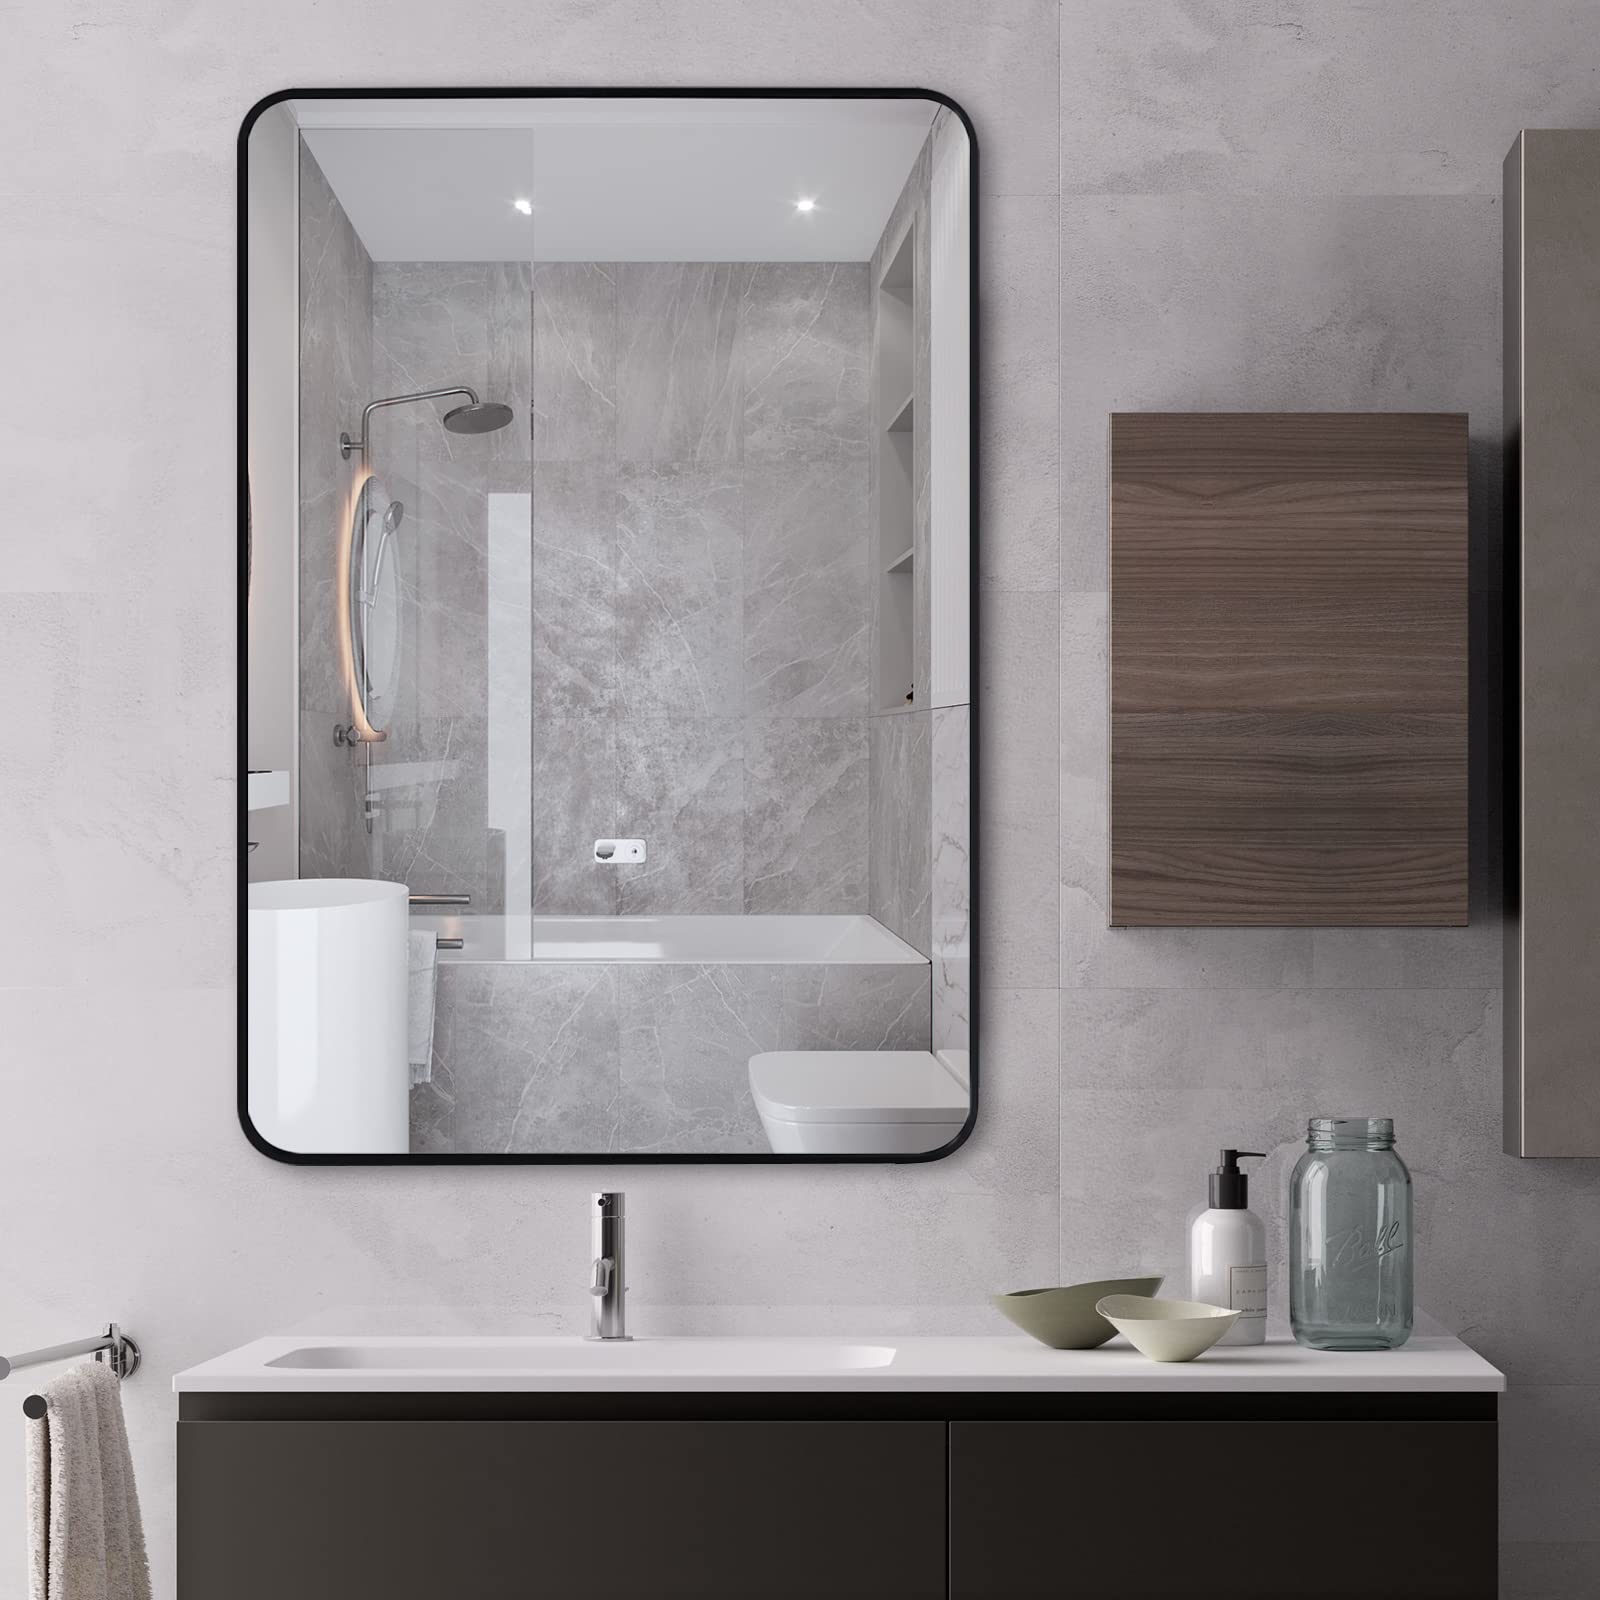 QEQRUG Bathroom Vanity Wall Mirror 40x30 Inch, Black Frame Rectangular Wall Mounted Mirror with Rounded Corner(Horizontal/Vertical), Large Modern Black Metal Framed Mirror